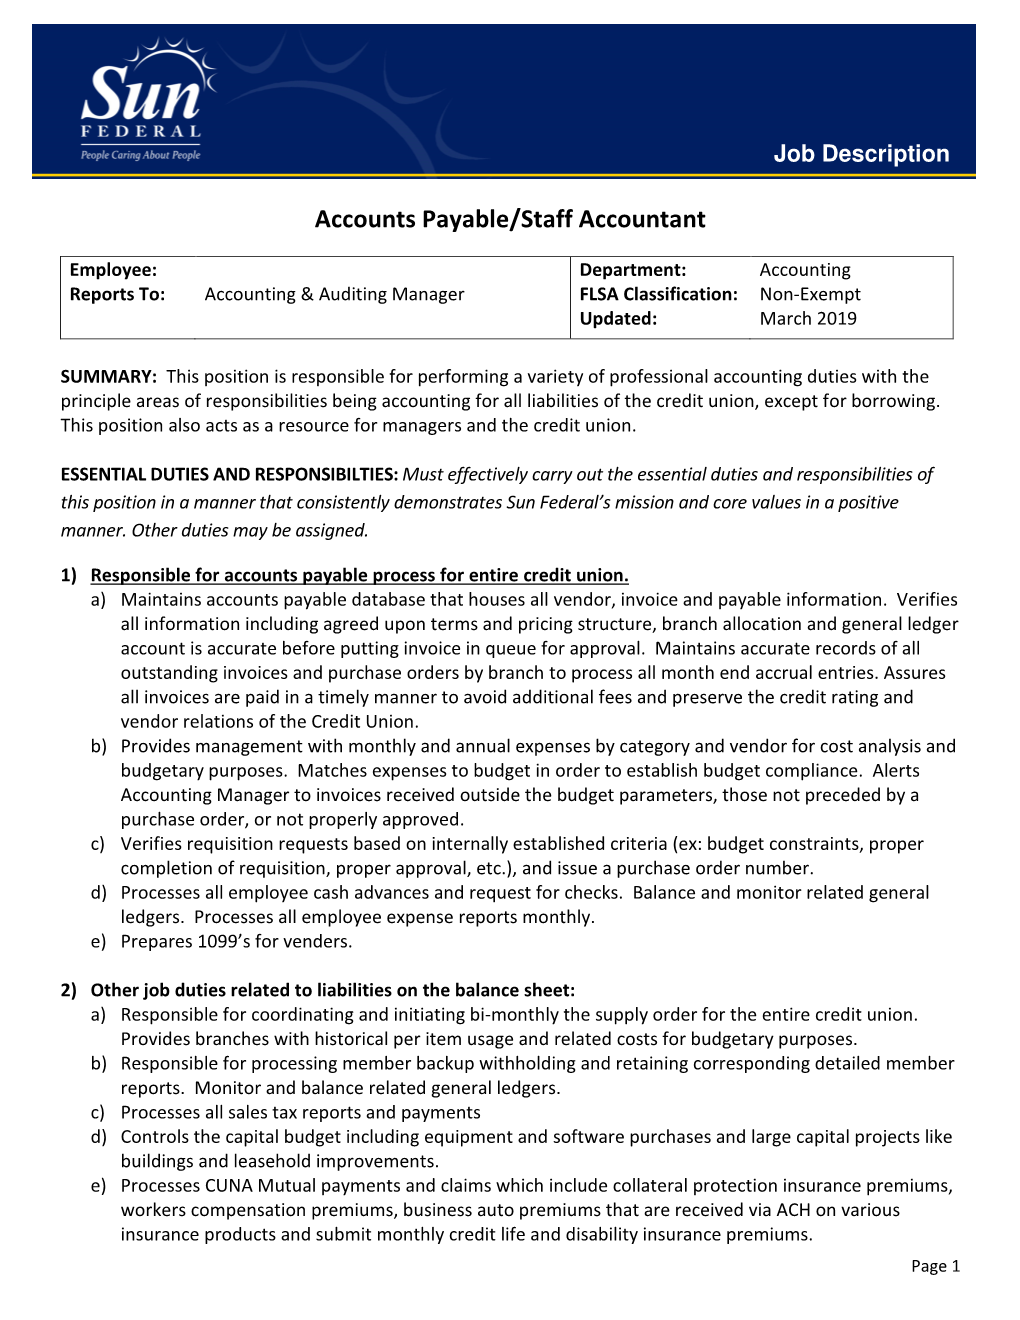 Accounts Payable/Staff Accountant